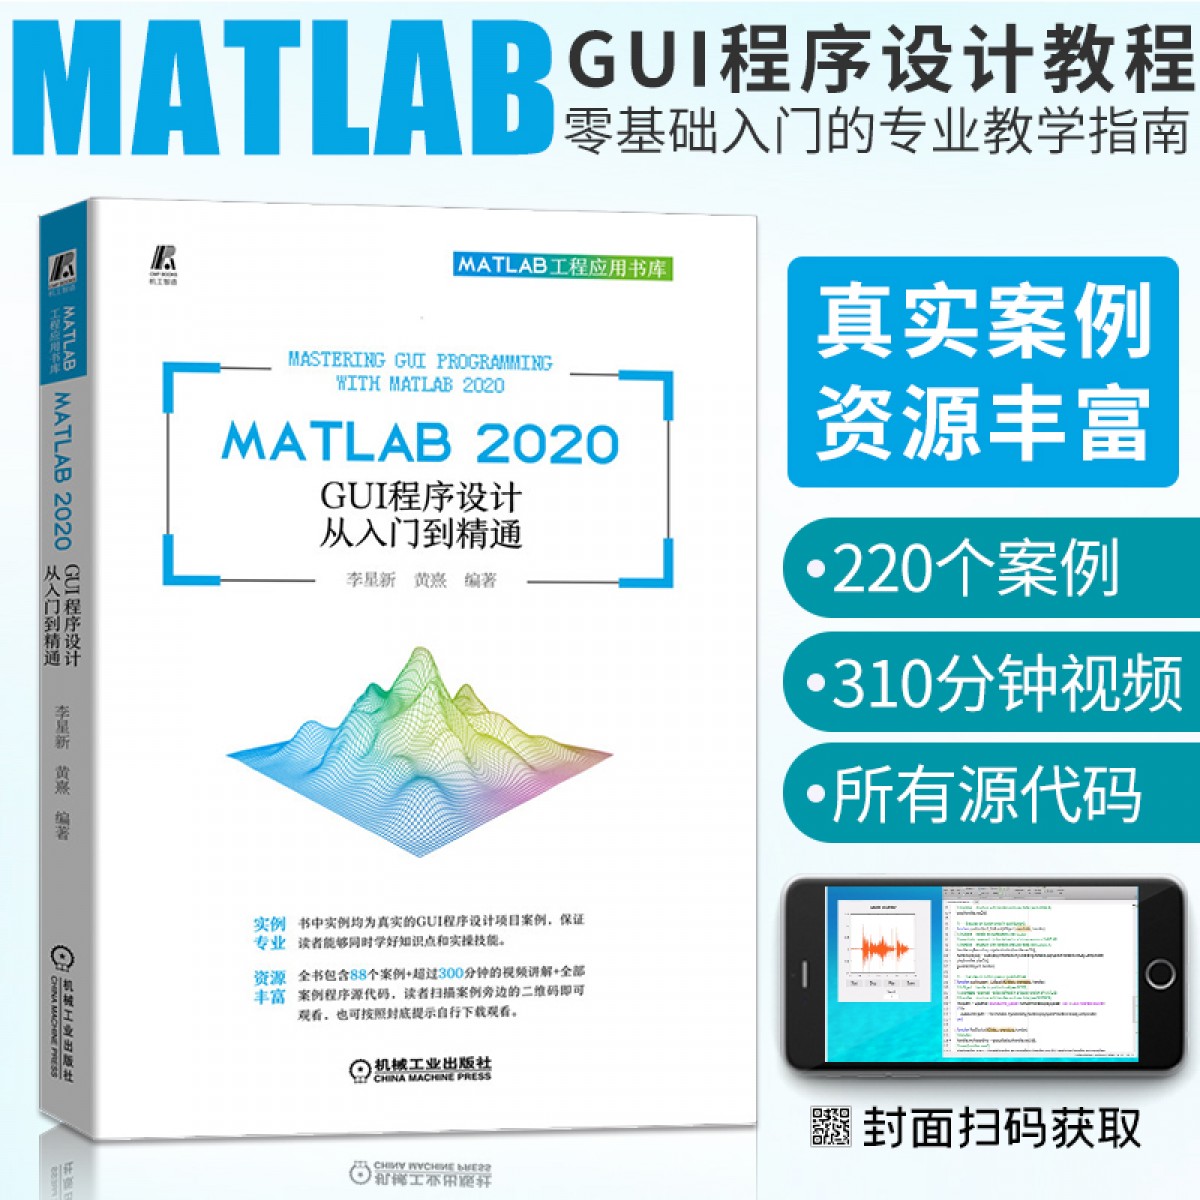 【视频教学】MATLAB 2020 从入门到精通 matlab教程书籍MATLAB R2020a完全自学一本通matlab2018a教程书籍 matlab数学建模应用自学【MATLAB2020 】 GUI程序设计